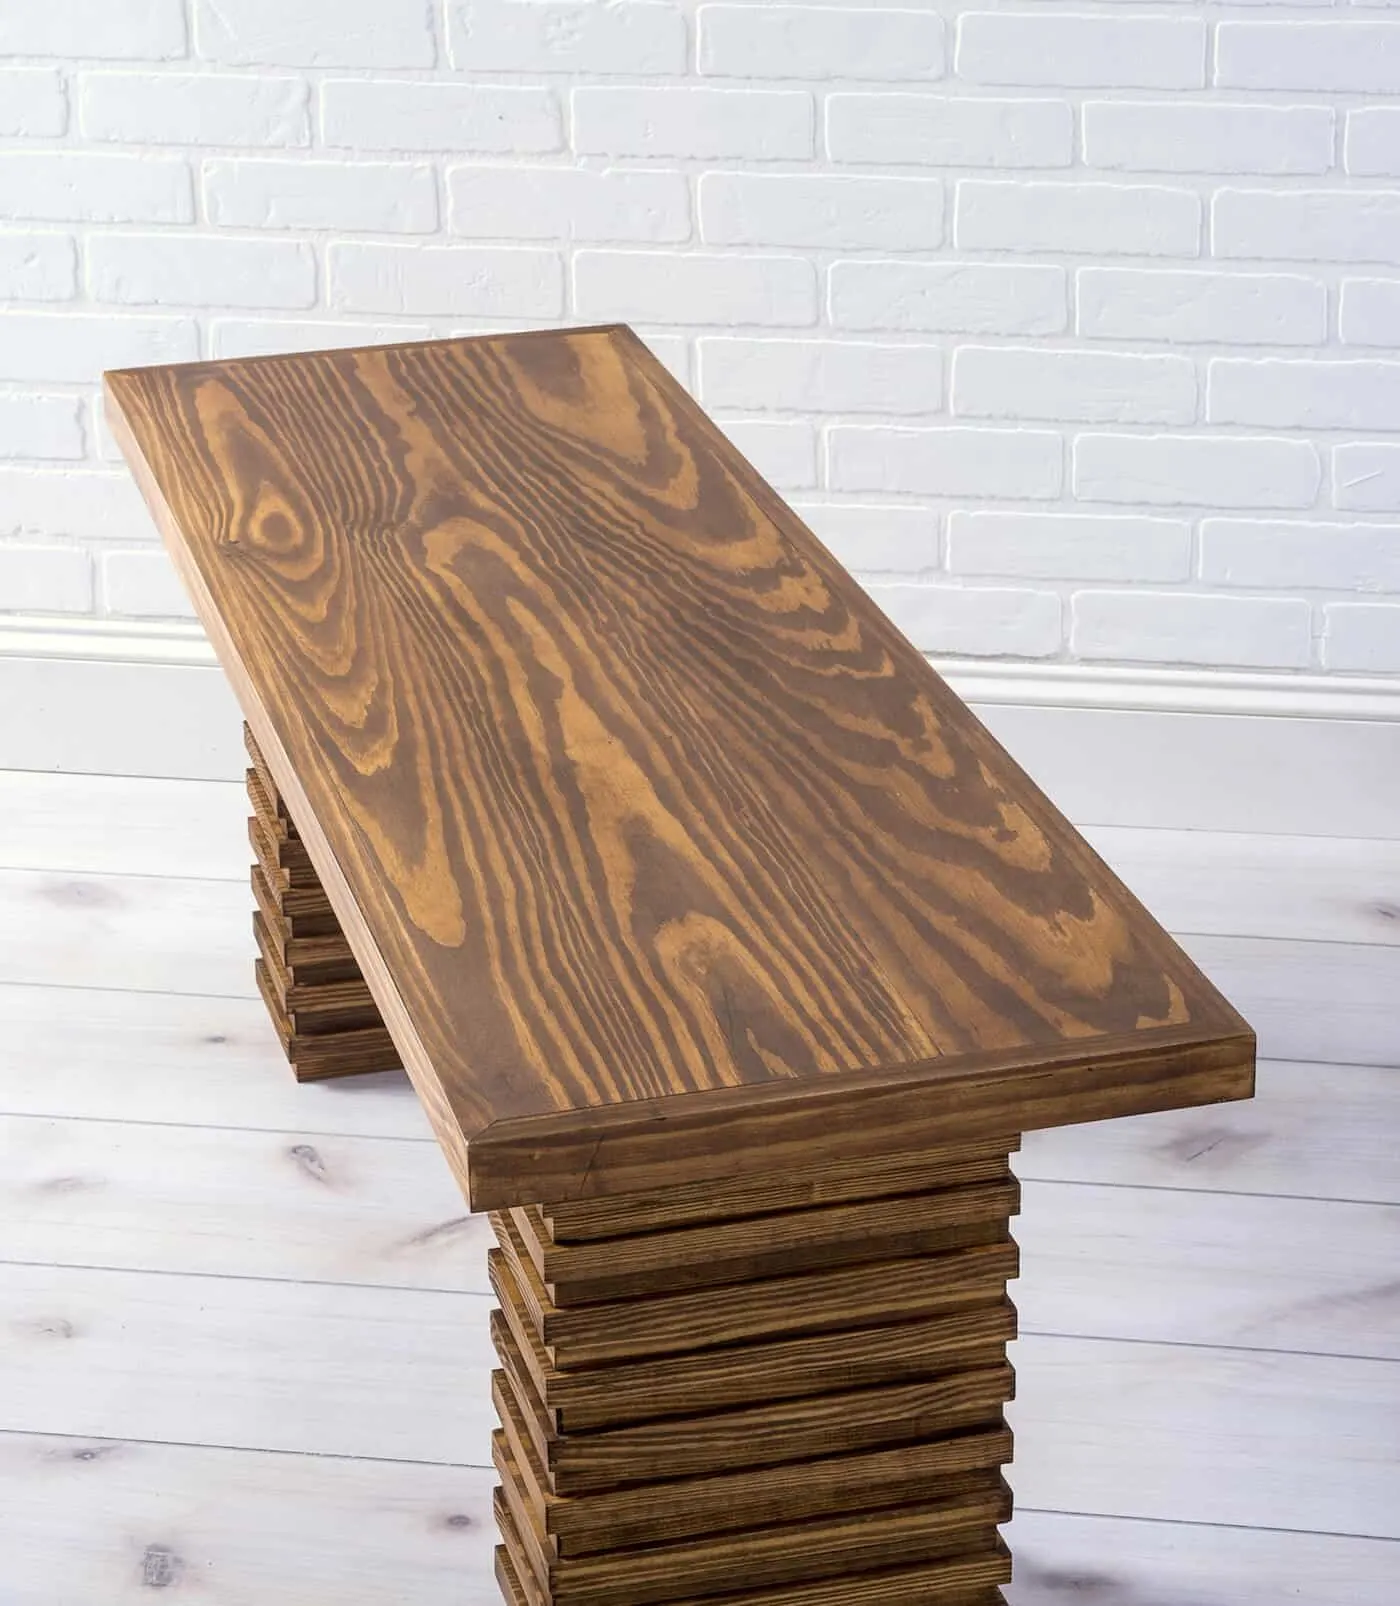 DIY wooden bench